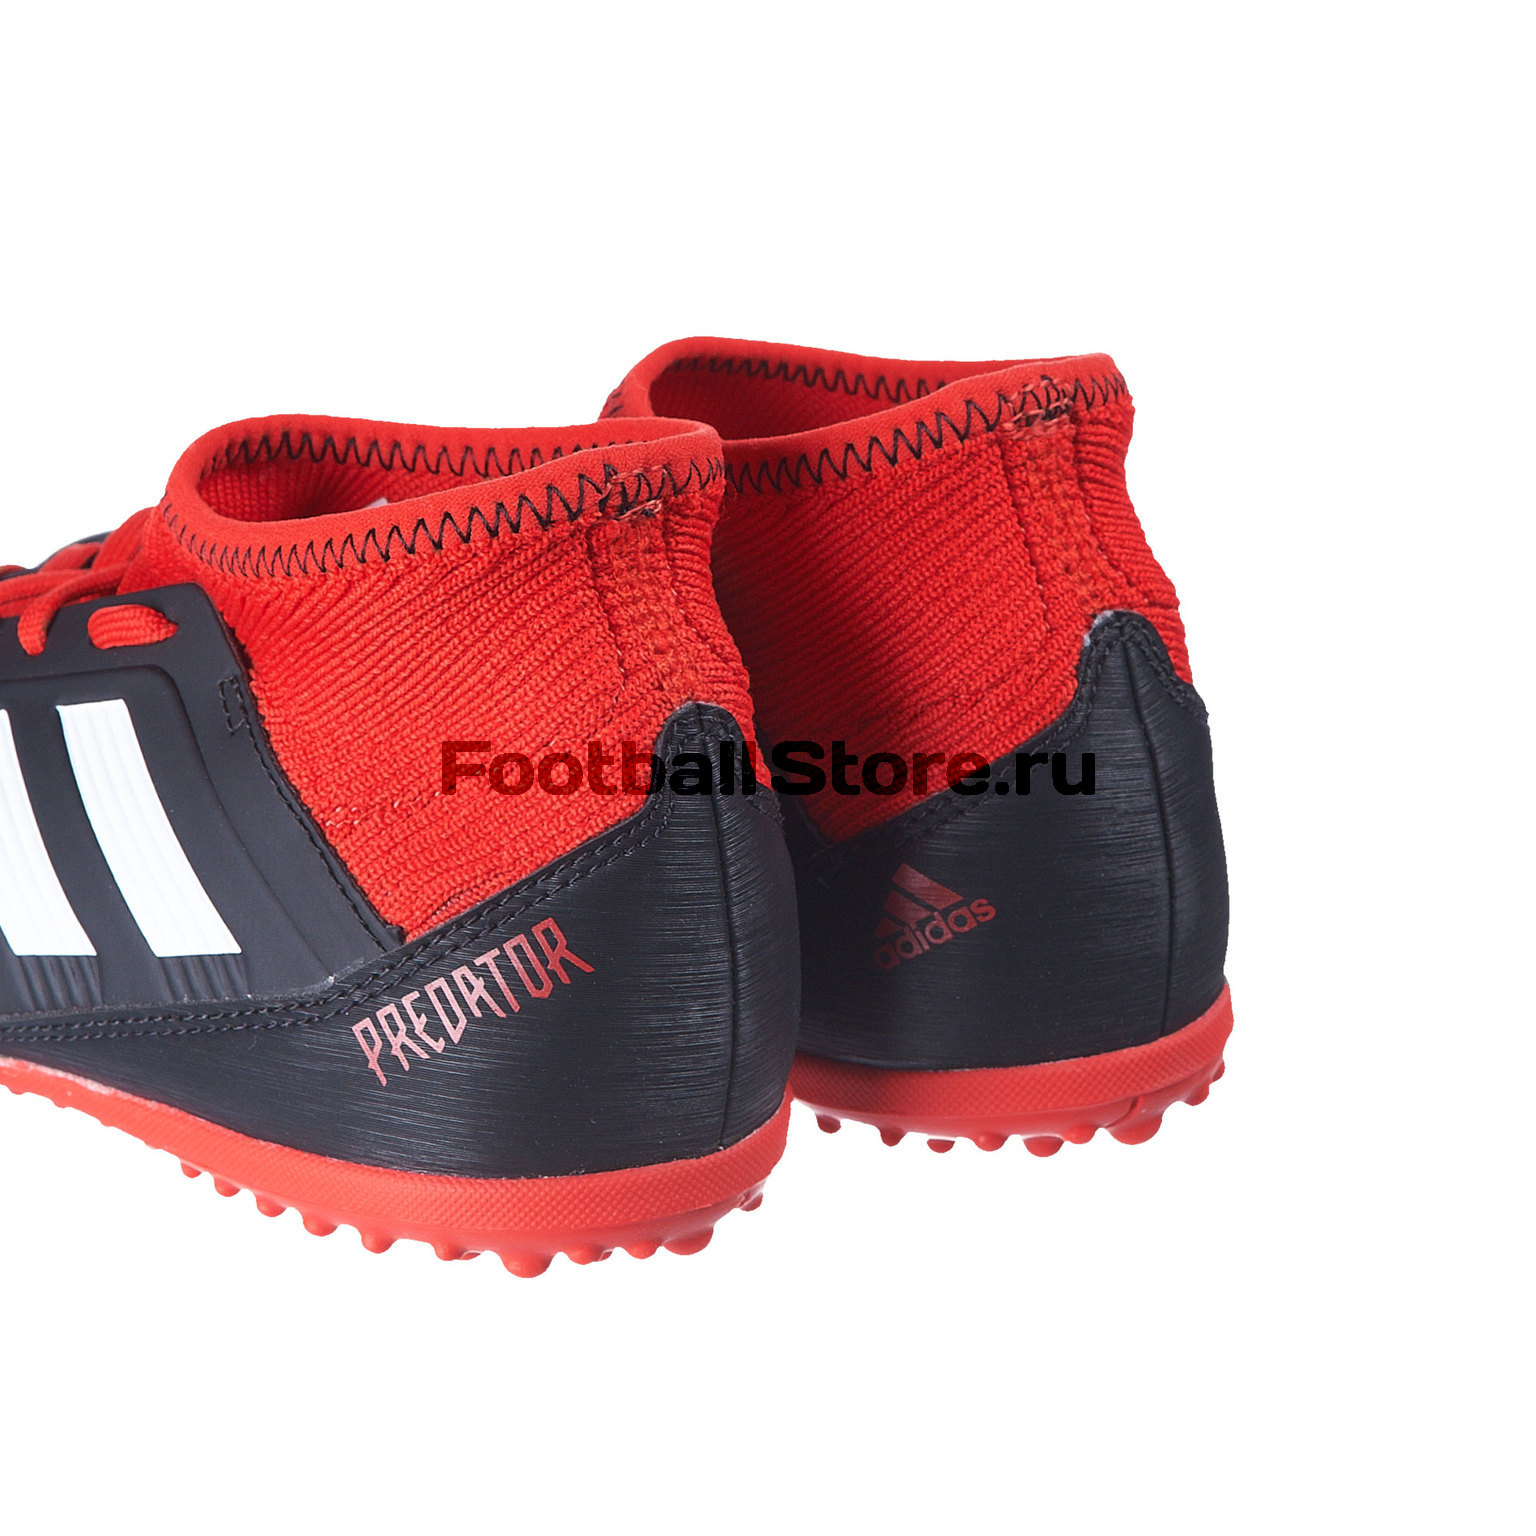 Шиповки детские Adidas Predator Tango 18.3 TF DB2330